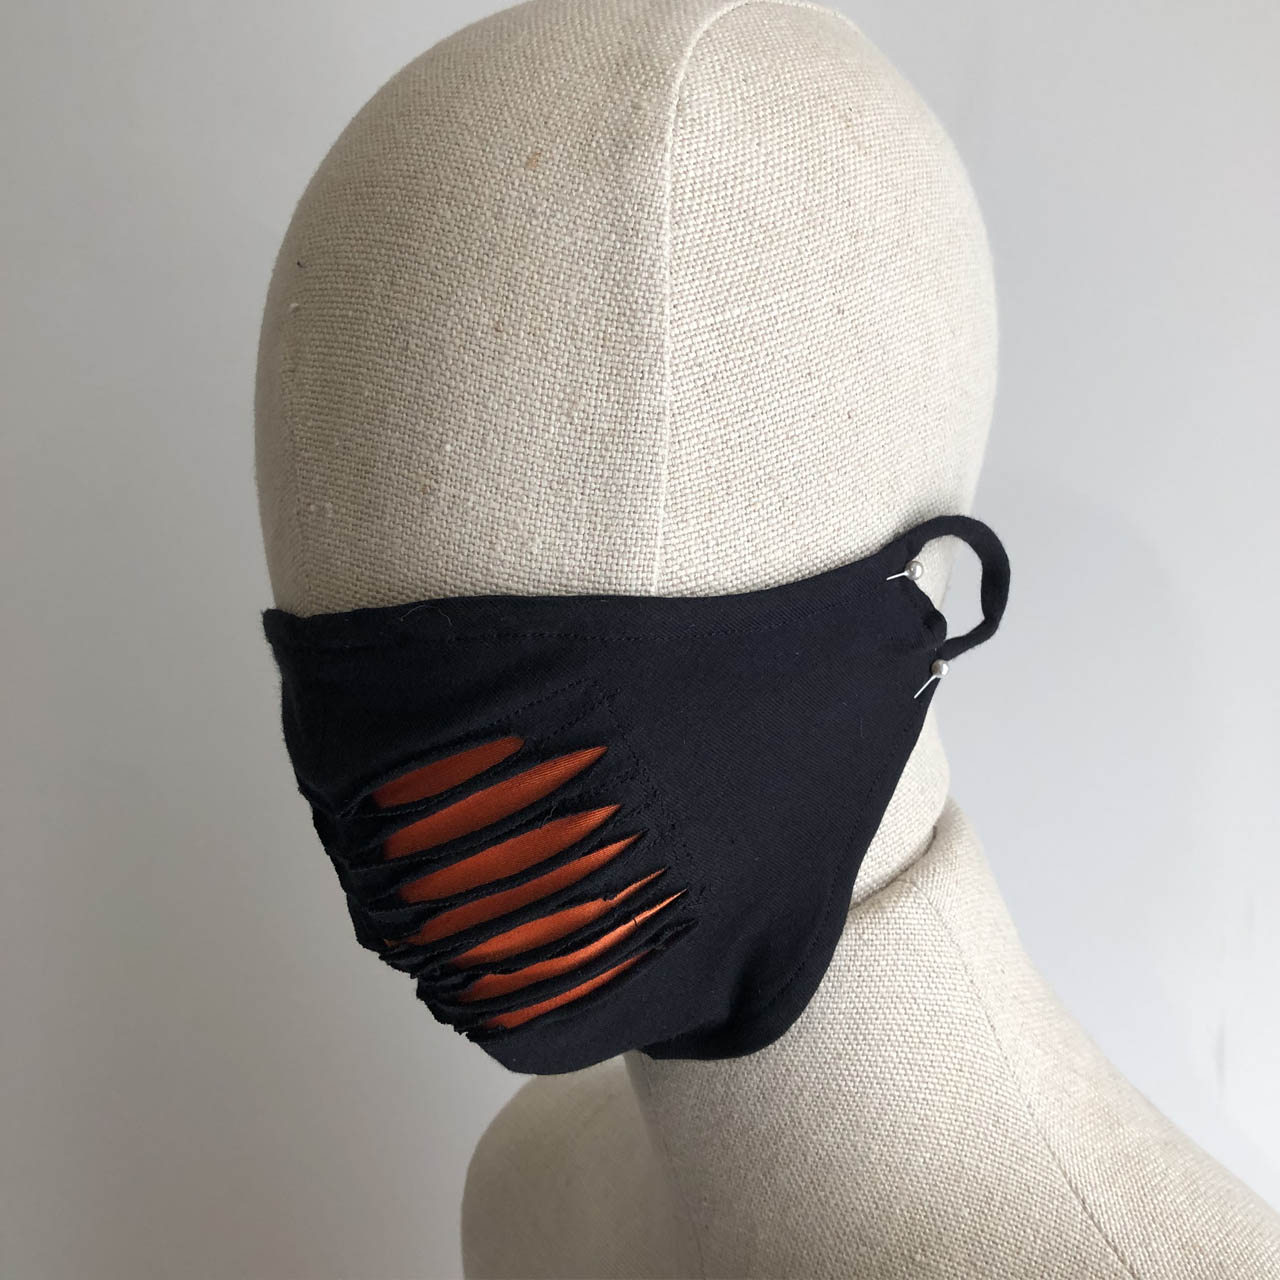 black mask - Grill design - $15 AUD plus post